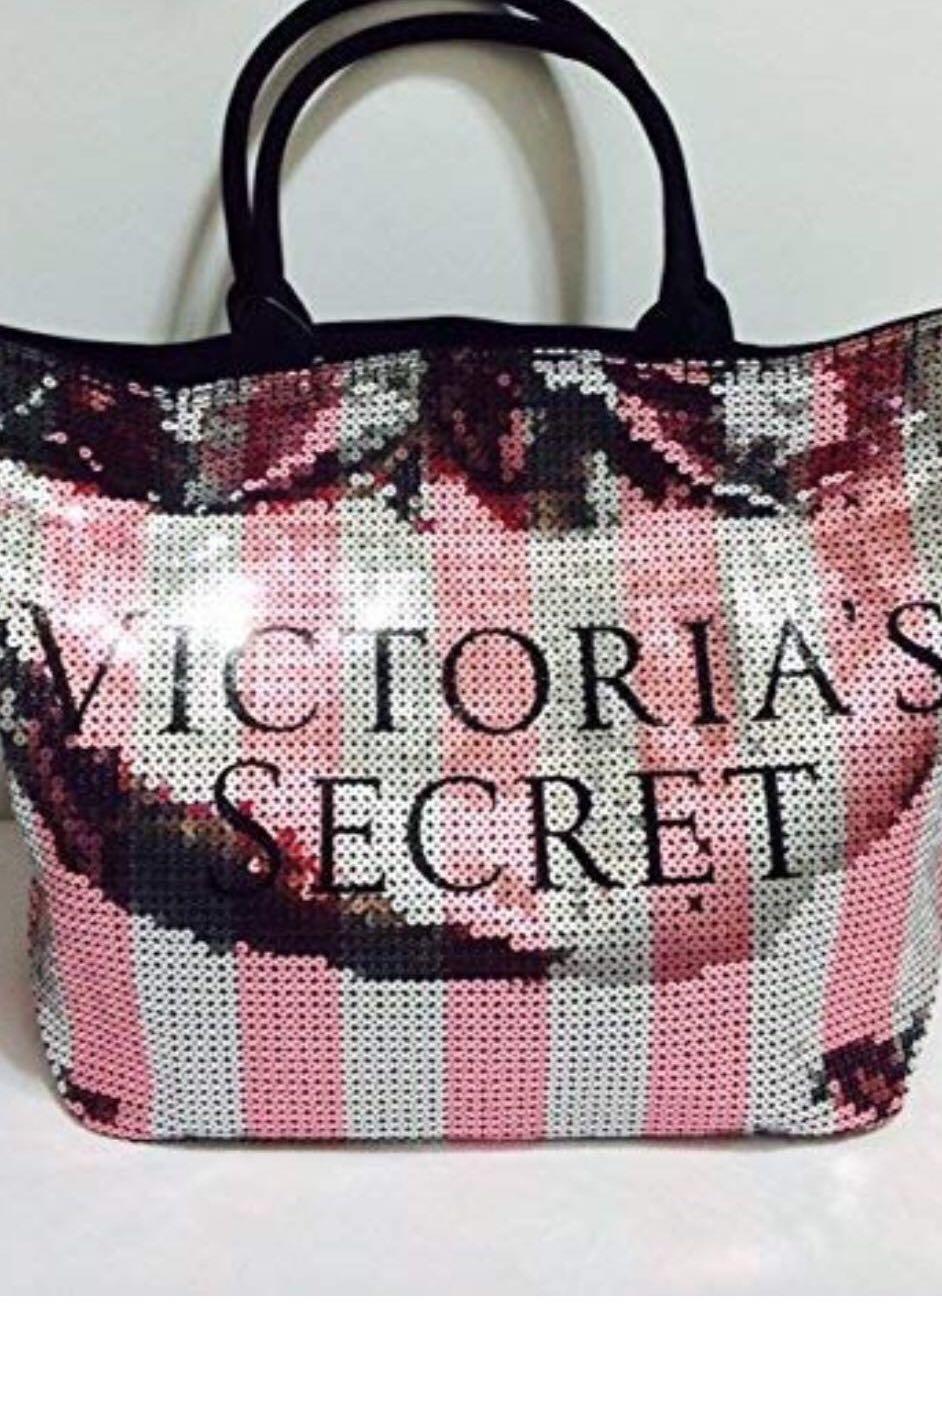 New Victoria’s Secret Bling Weekender Tote Bag Duffle Gym Bag Black Red Sequins 